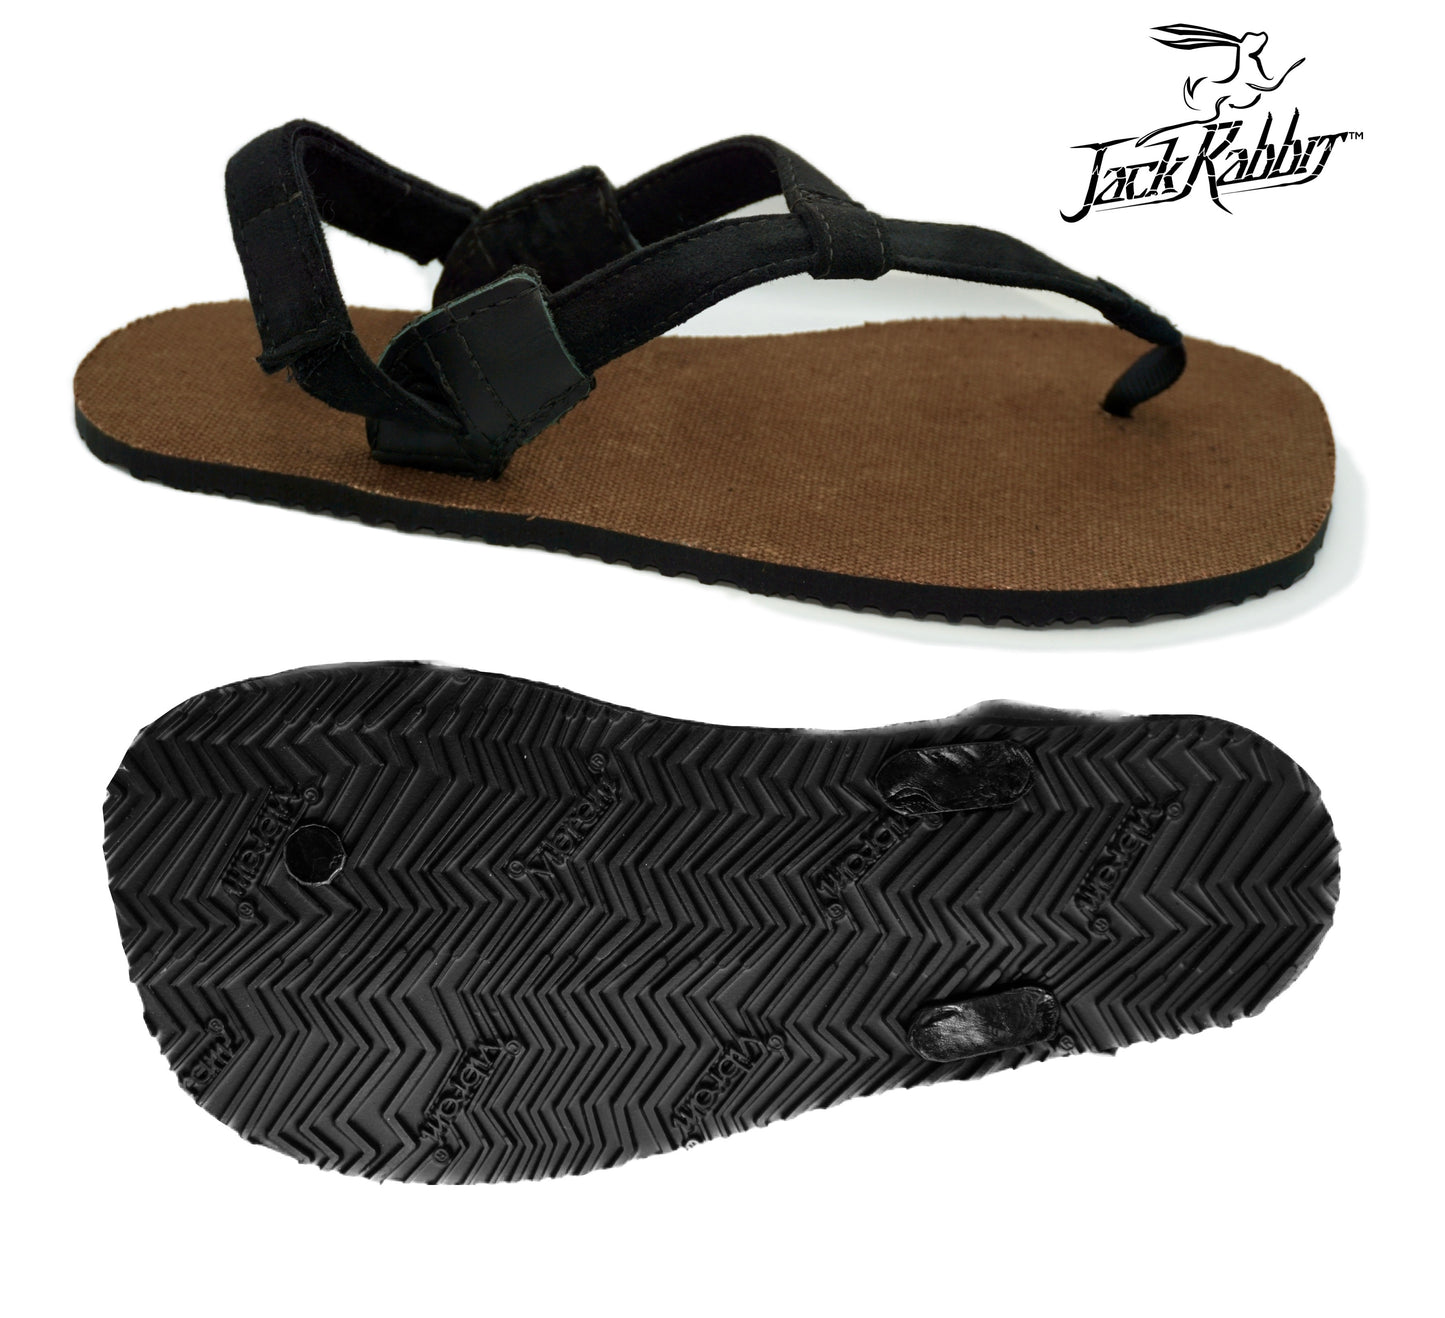 JackRabbit Sandals Barefoot Brown Hemp Footbed